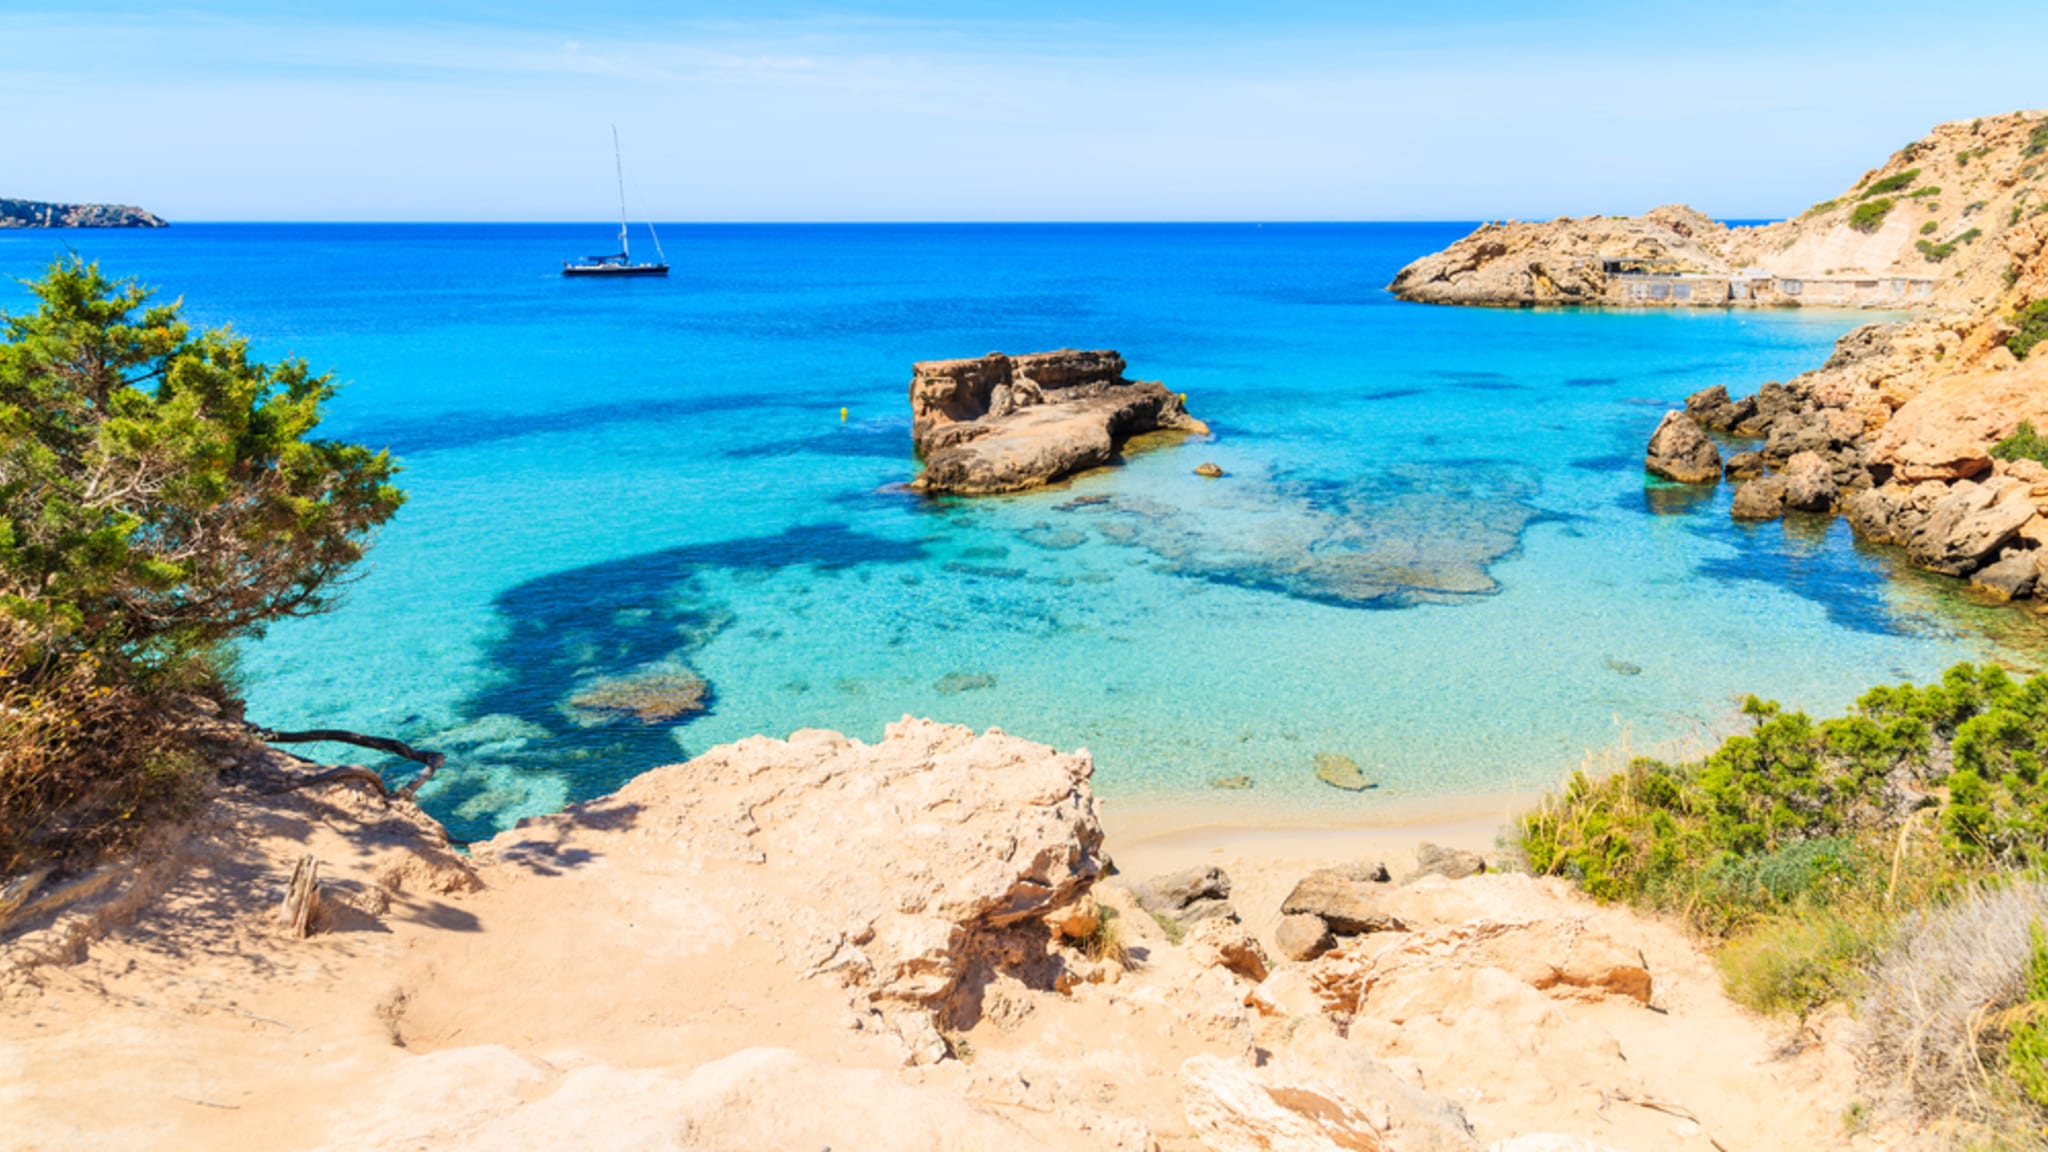 Kristallklares Wasser am Strand Cala Tarida auf Ibiza